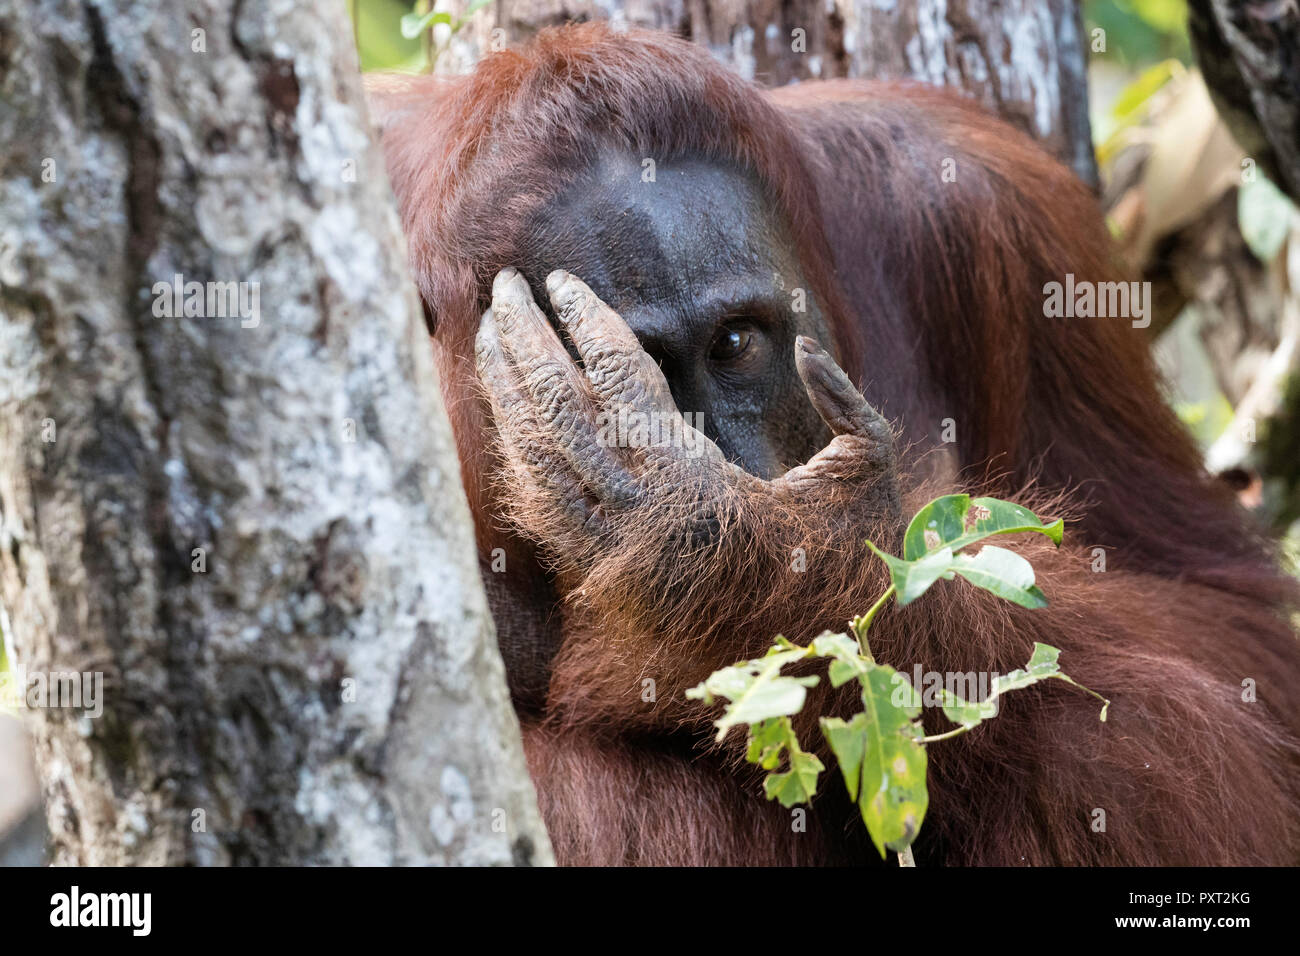 Male Bornean orangutan, Pongo pygmaeus, Tanjung Puting National Park, Borneo, Indonesia. Stock Photo